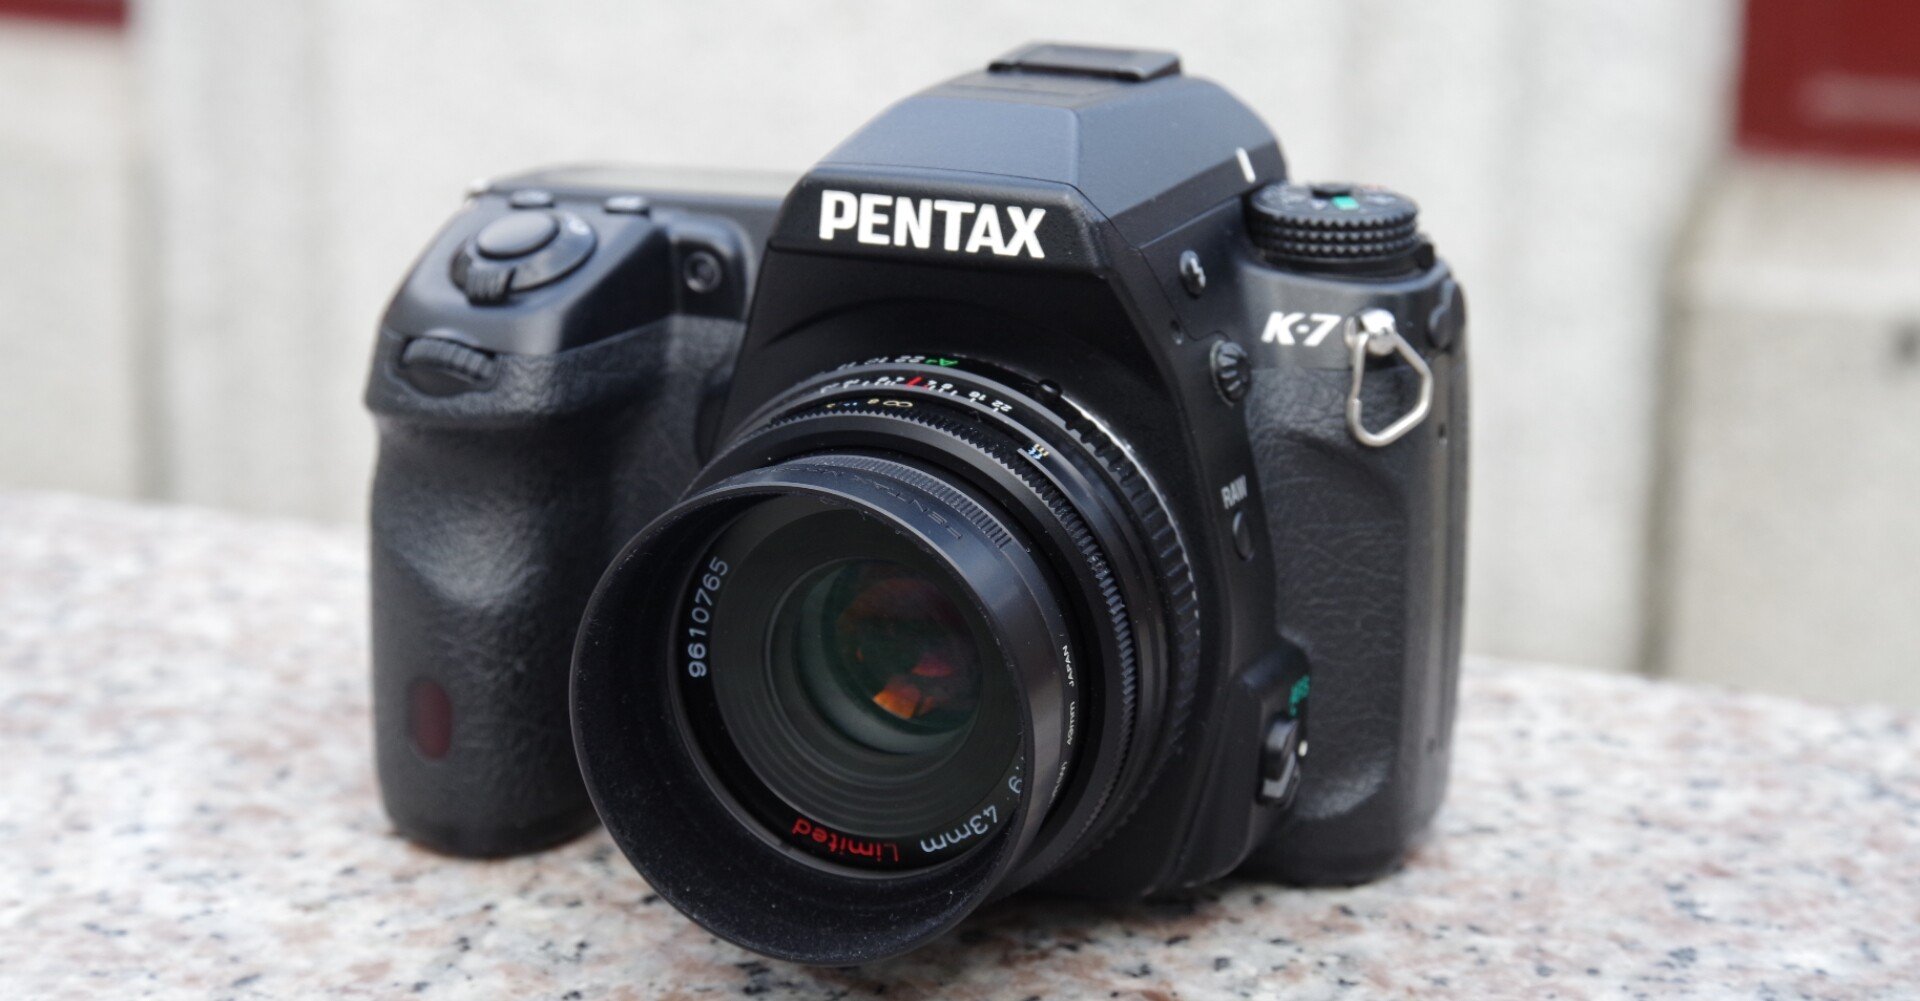 PENTAX デジタル一眼レフカメラ K-7 ボディK-7